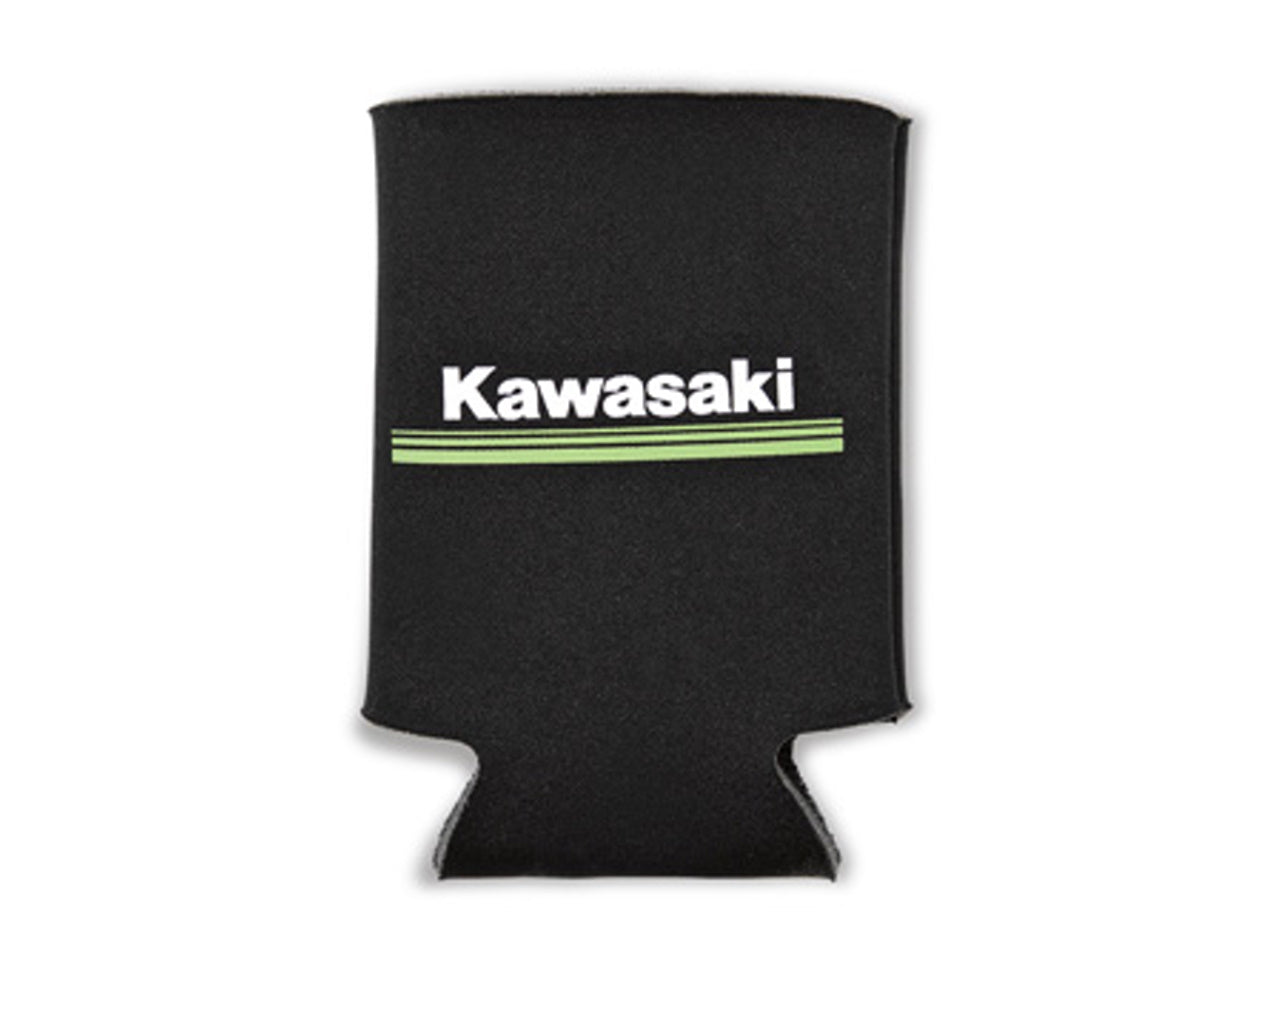 Kawasaki 3 Lines Collapsible Can Cooler  K066-9027-BKNS